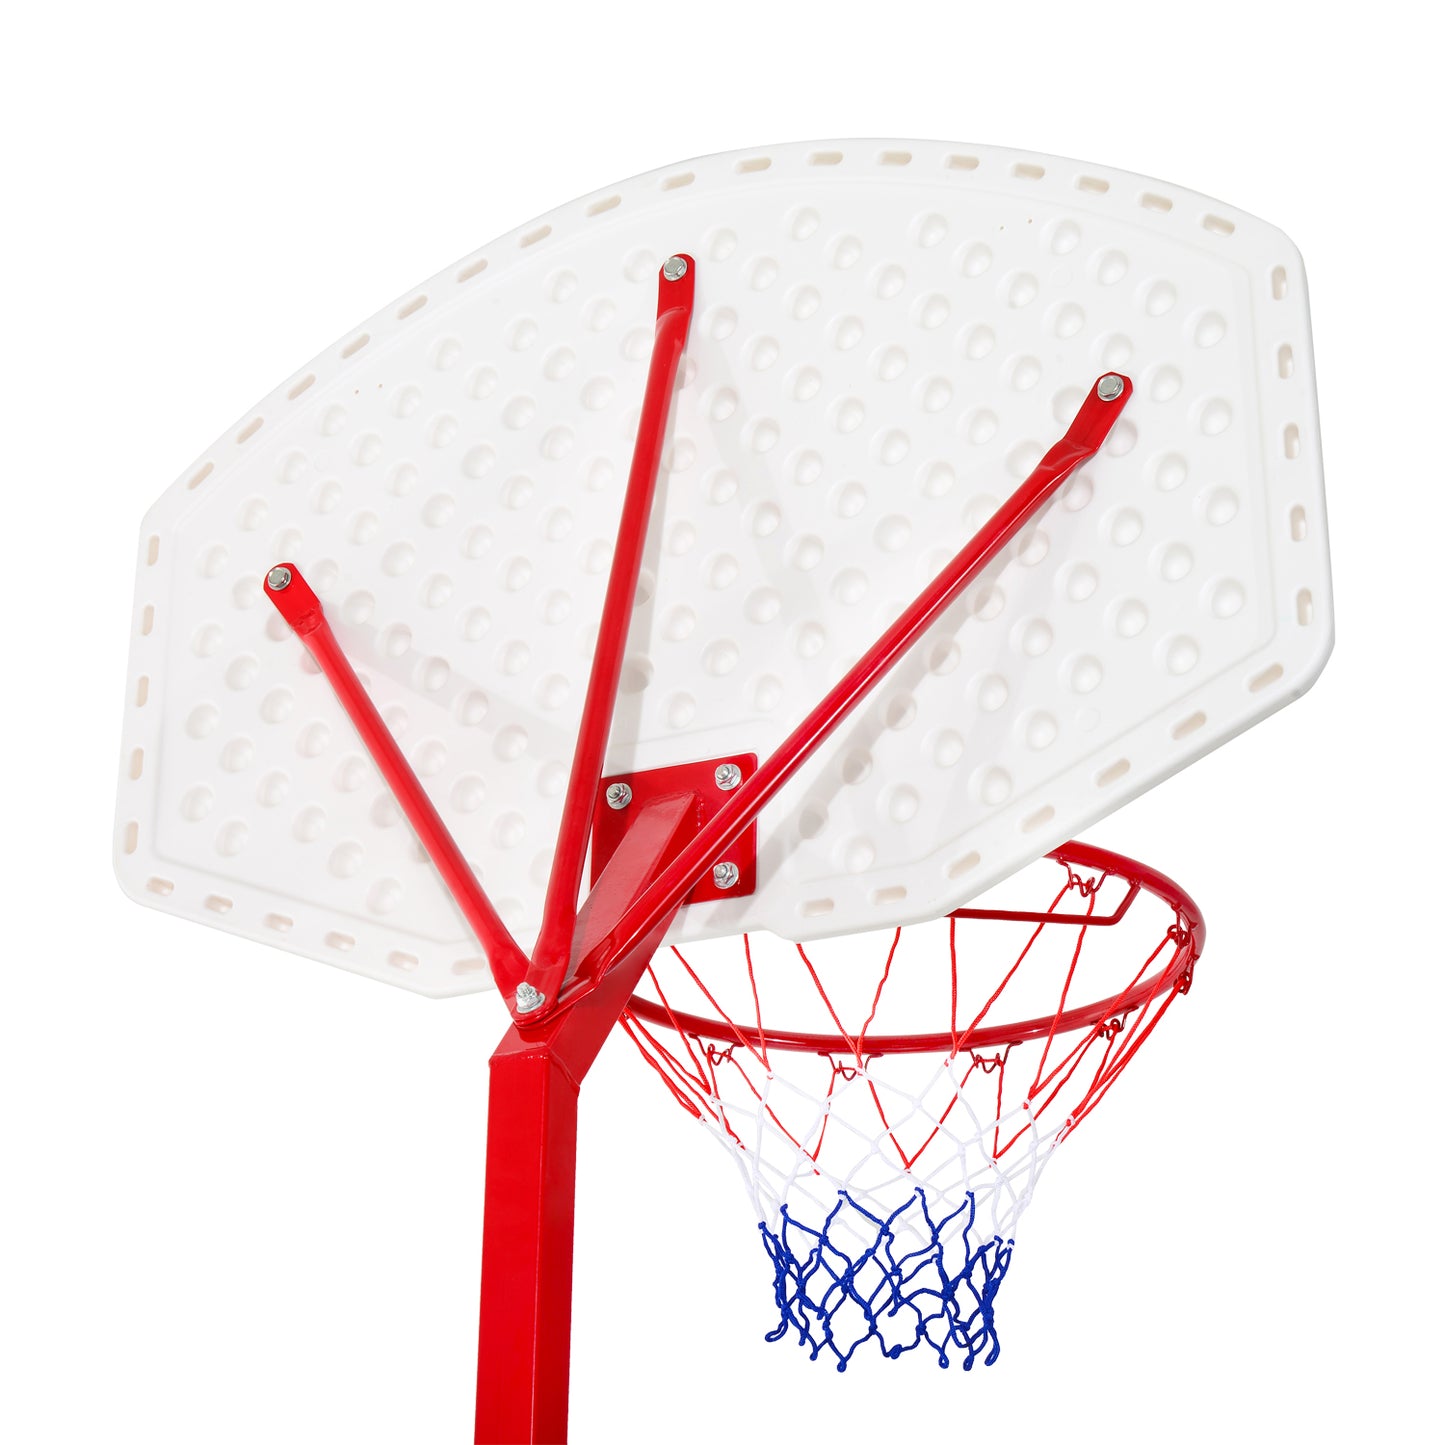 HOMCOM Steel Basketball Stand Height Adjustable Hoop Backboard Red